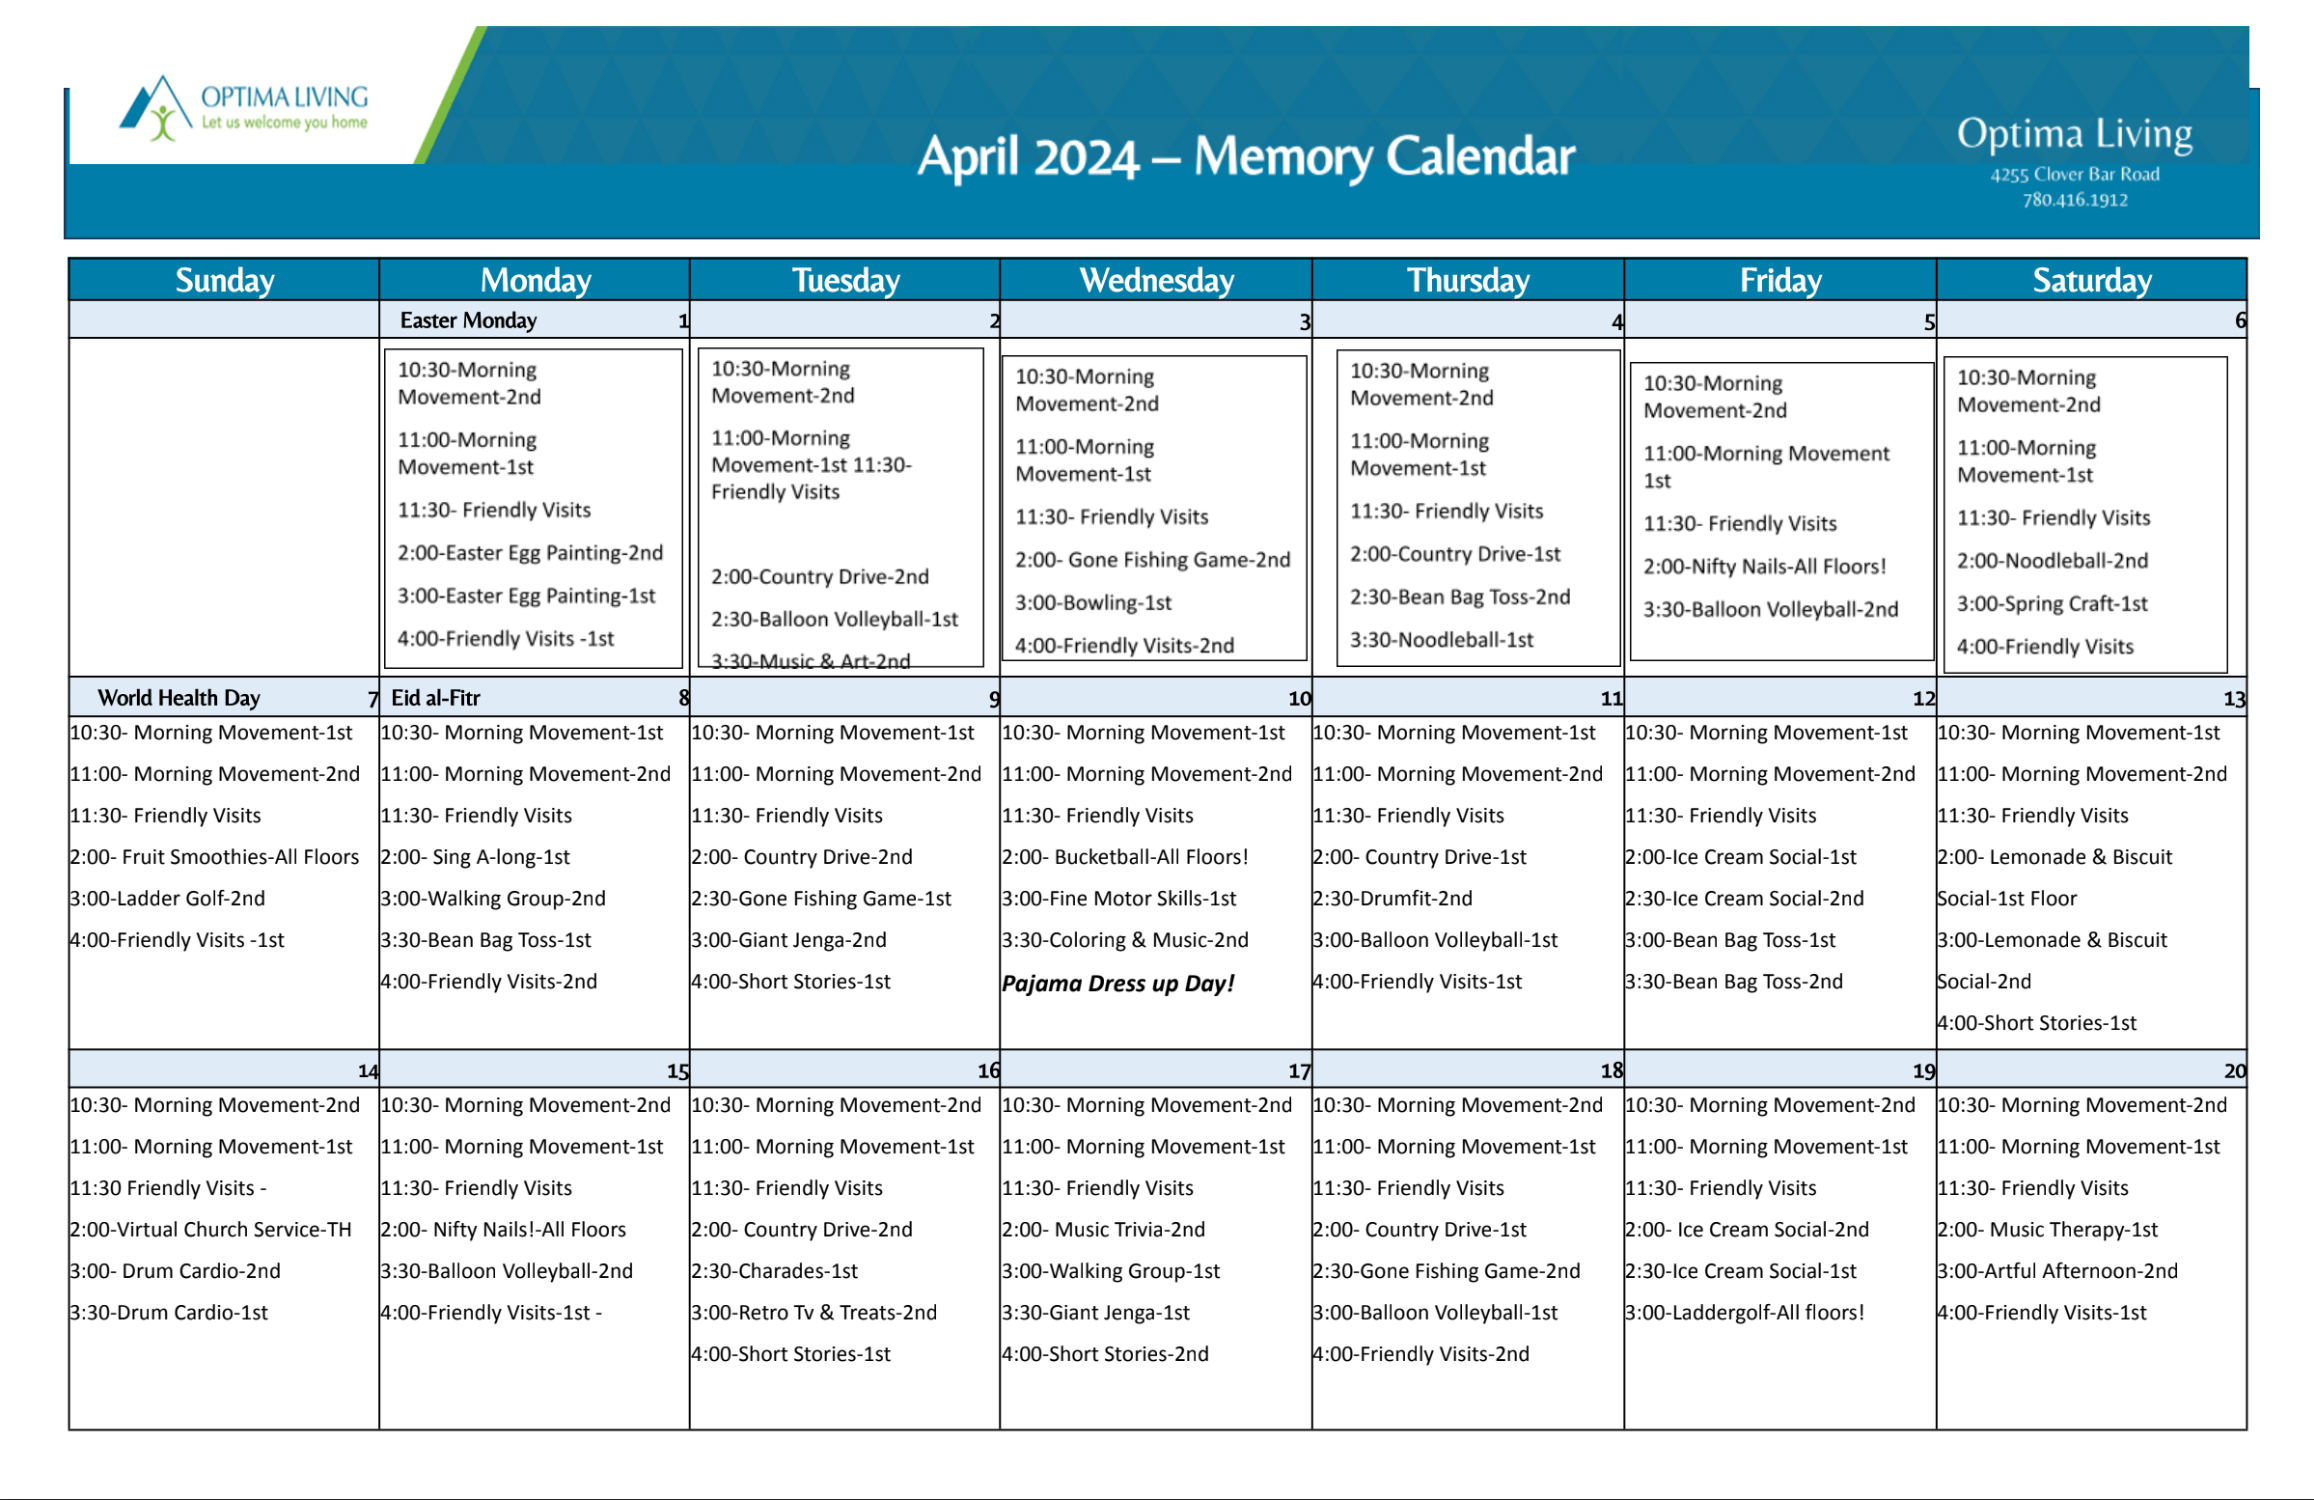 Summerwood Village April 1-20 2024 Memory Care event calendar